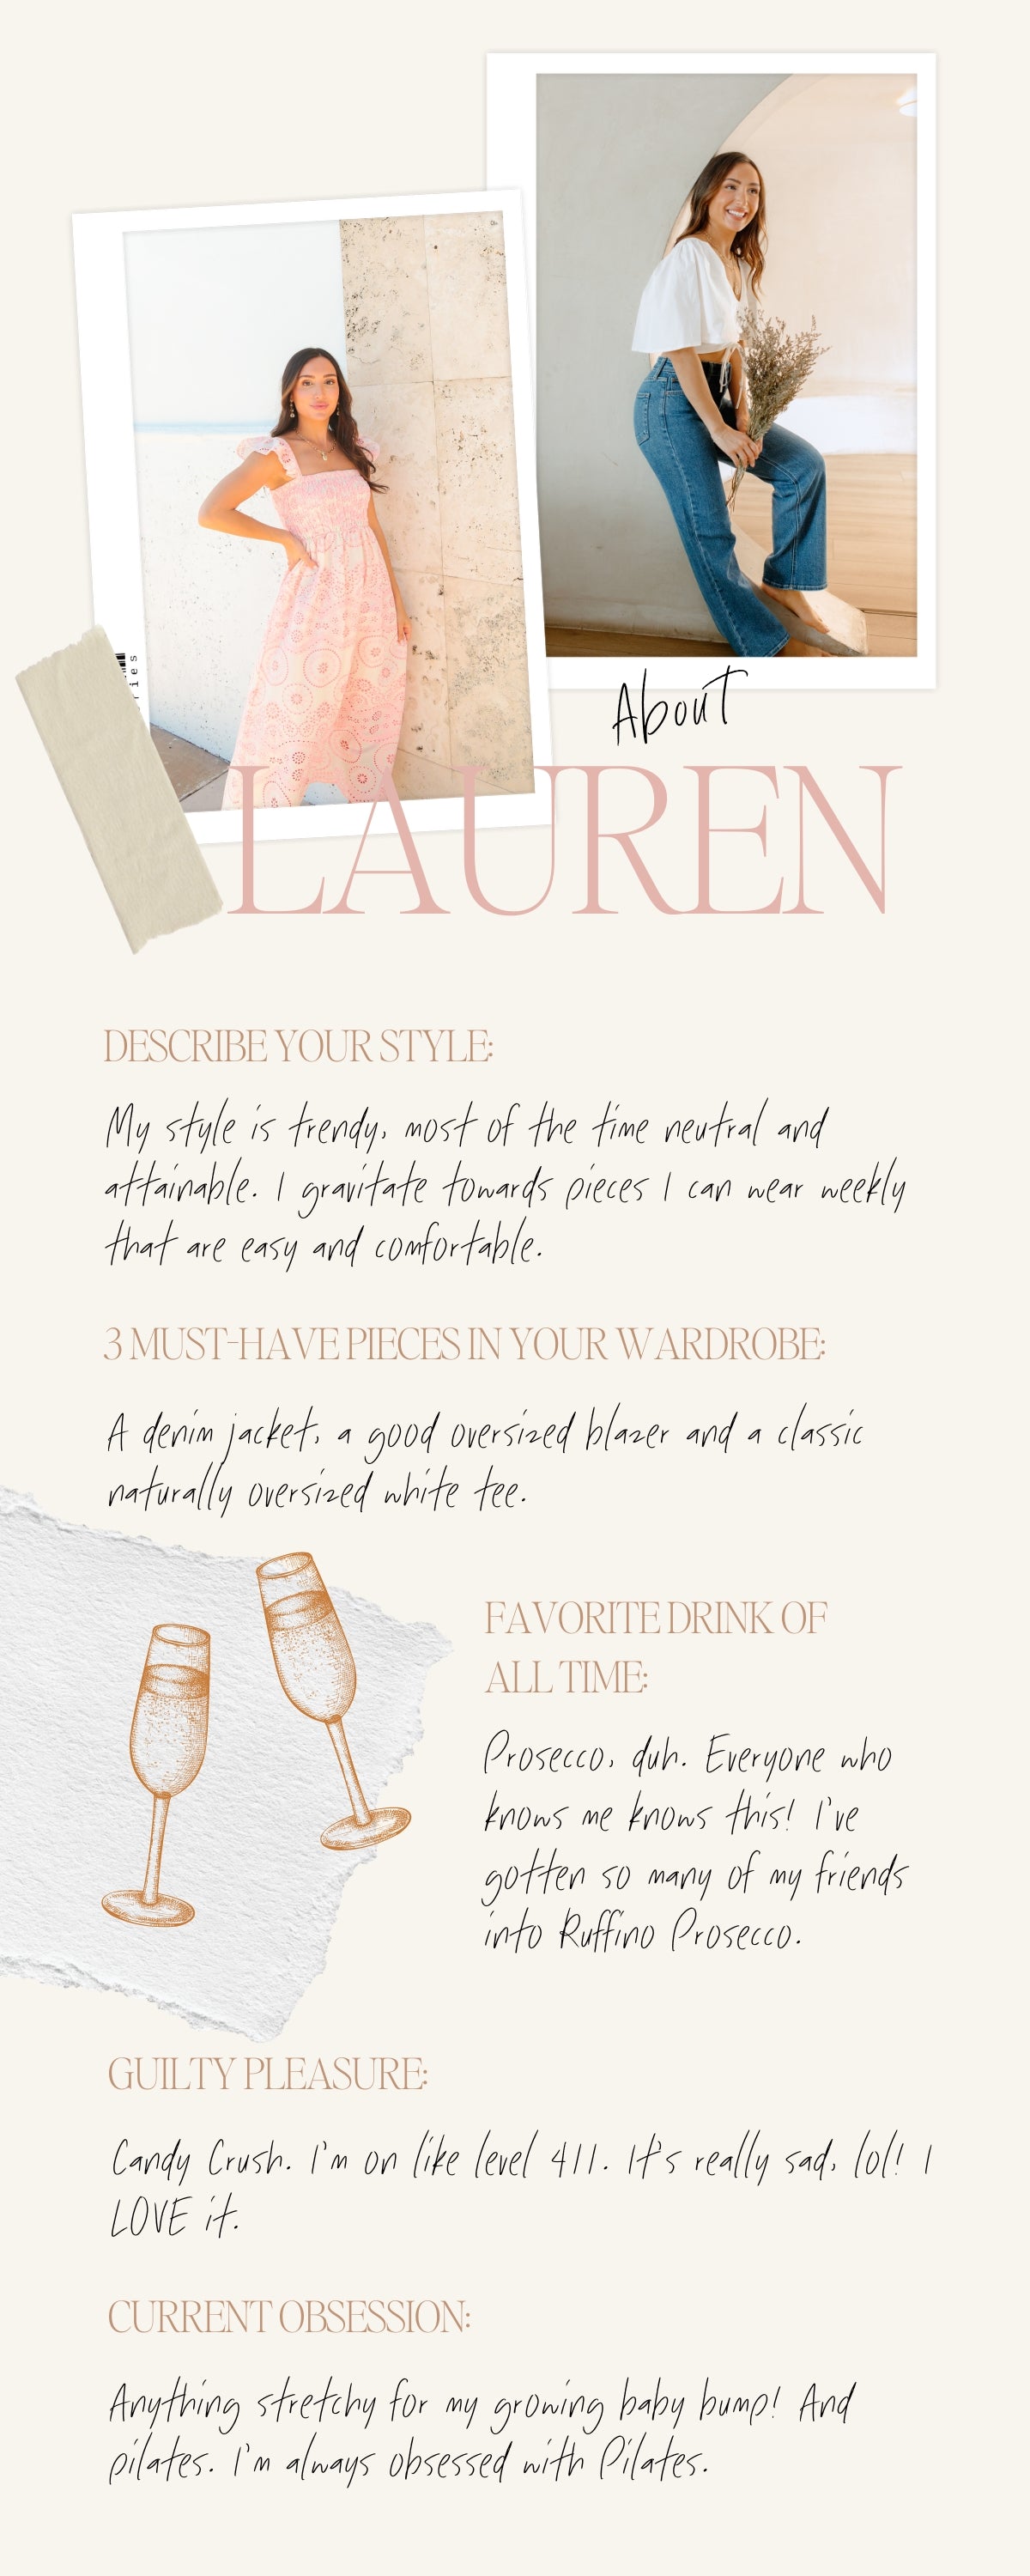 About Lauren